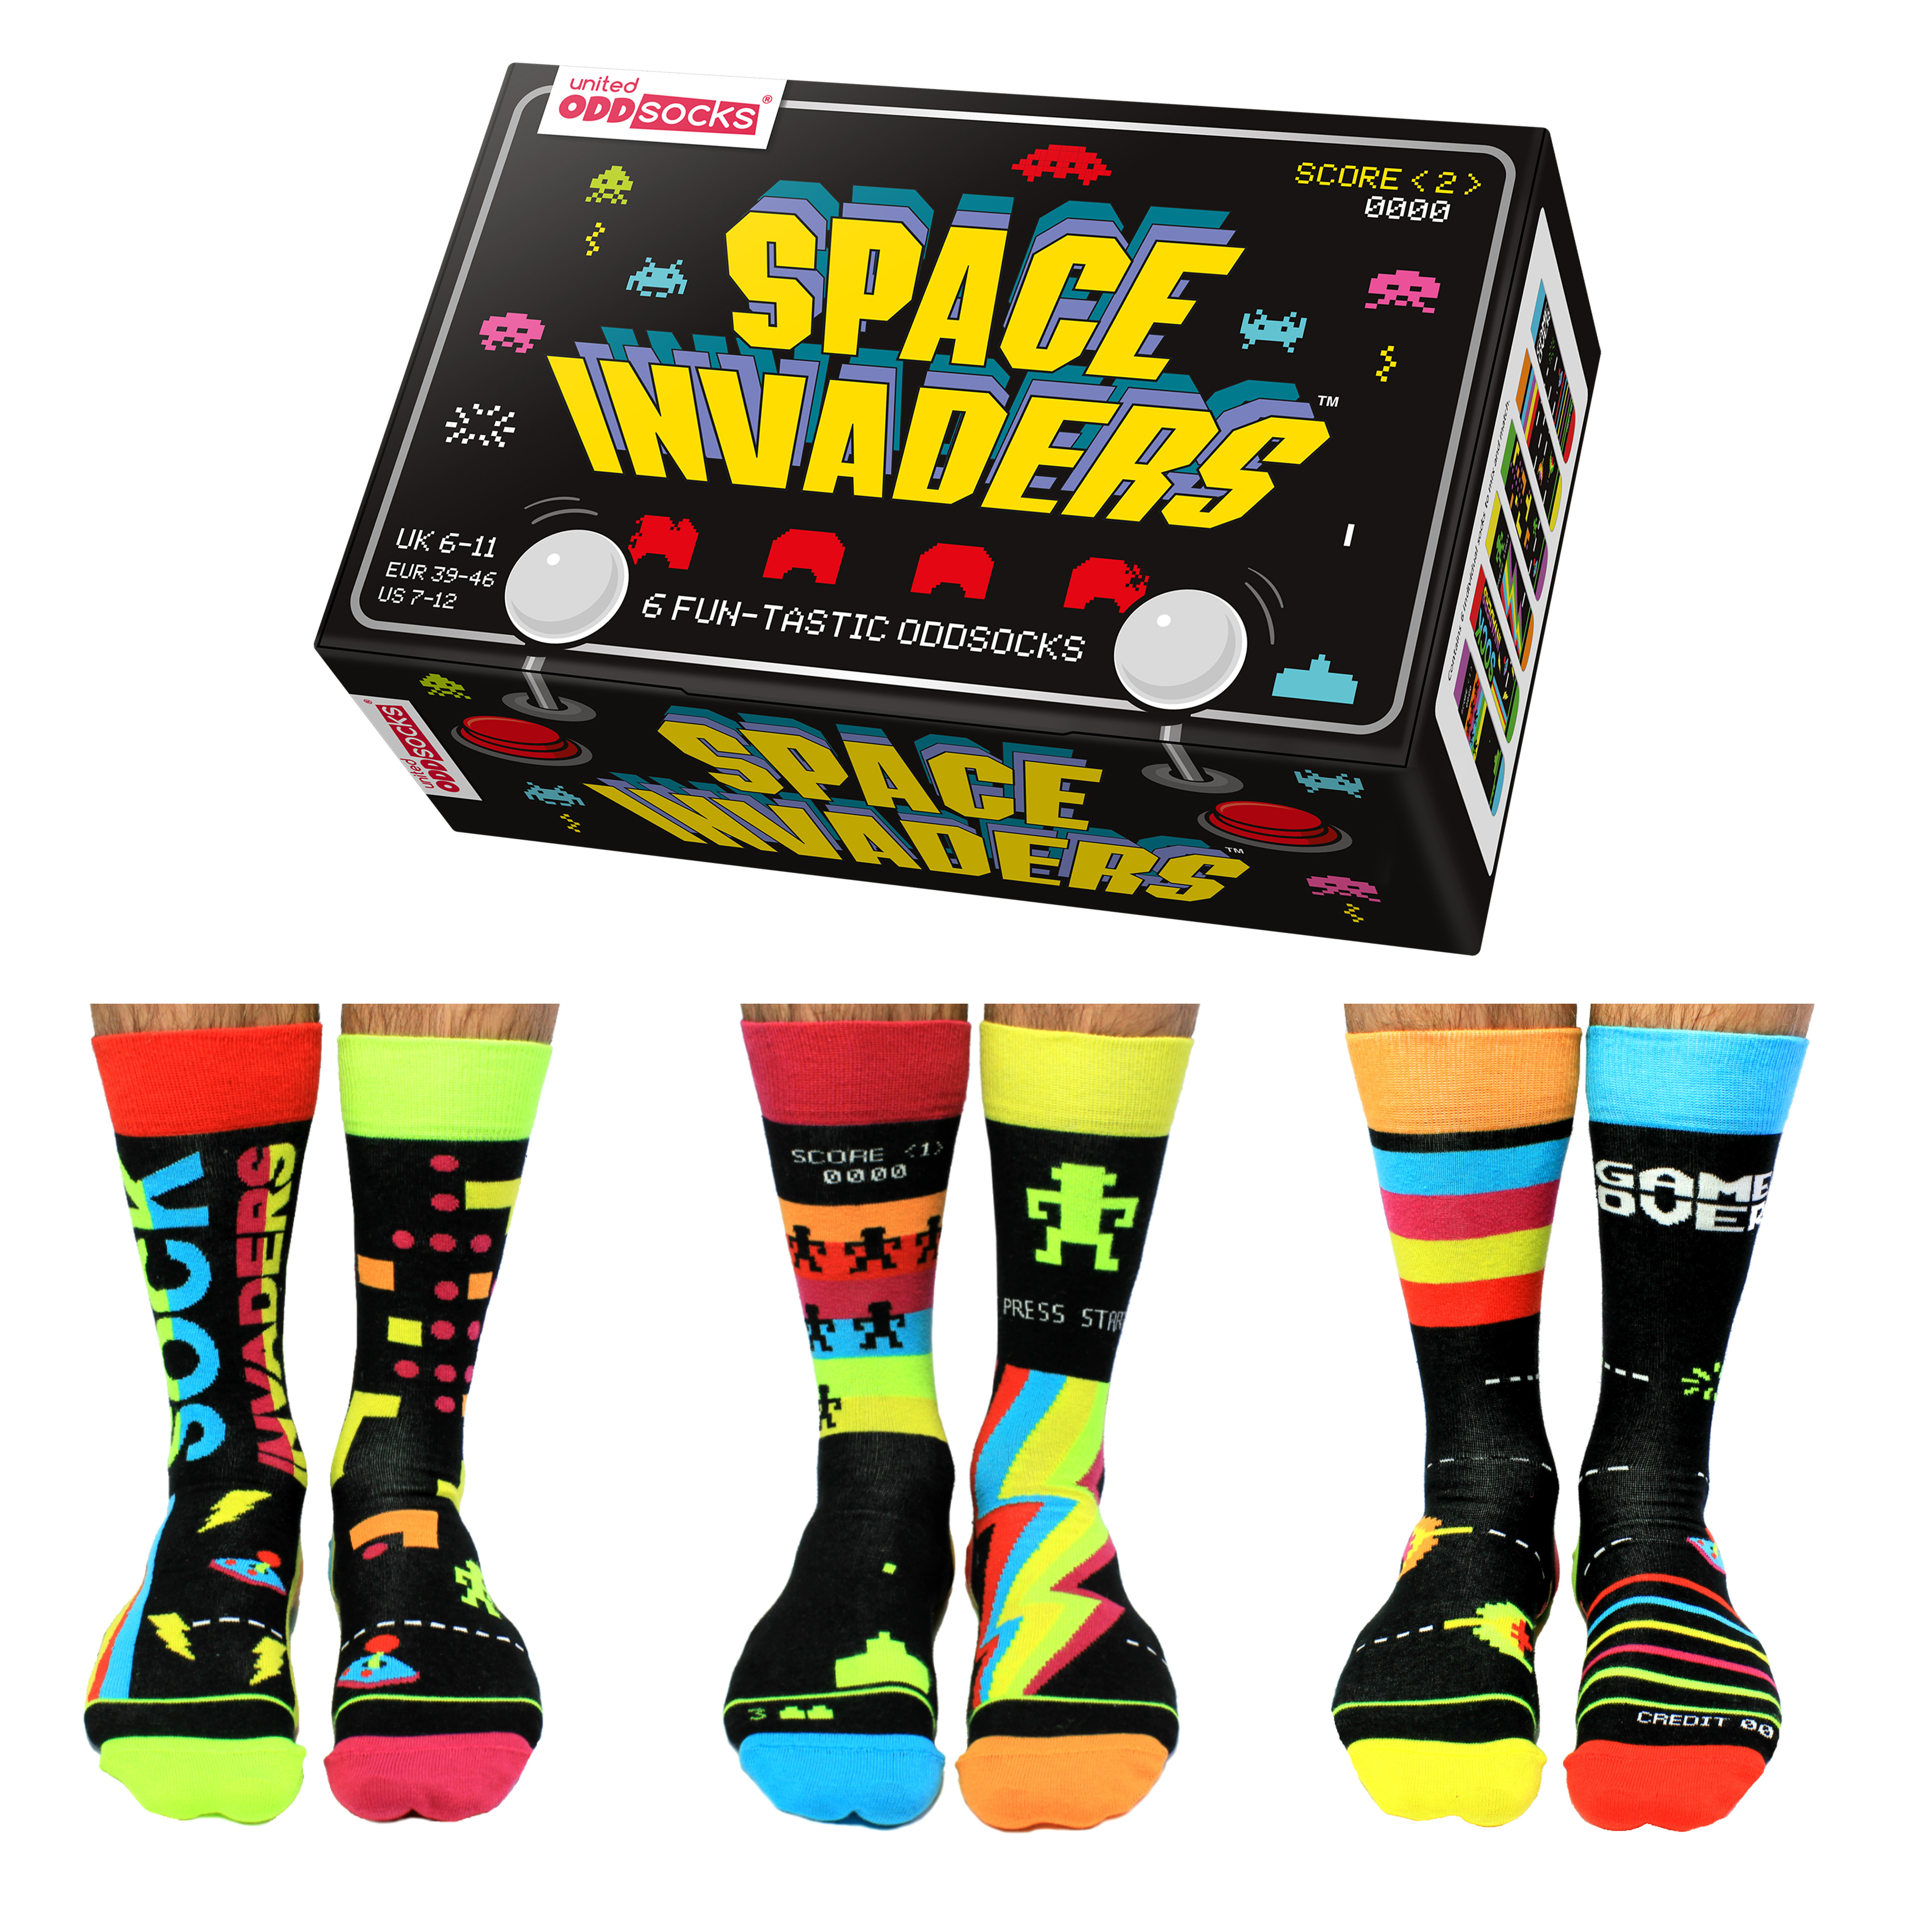 Space Invaders Novelty Socks by United Oddsocks